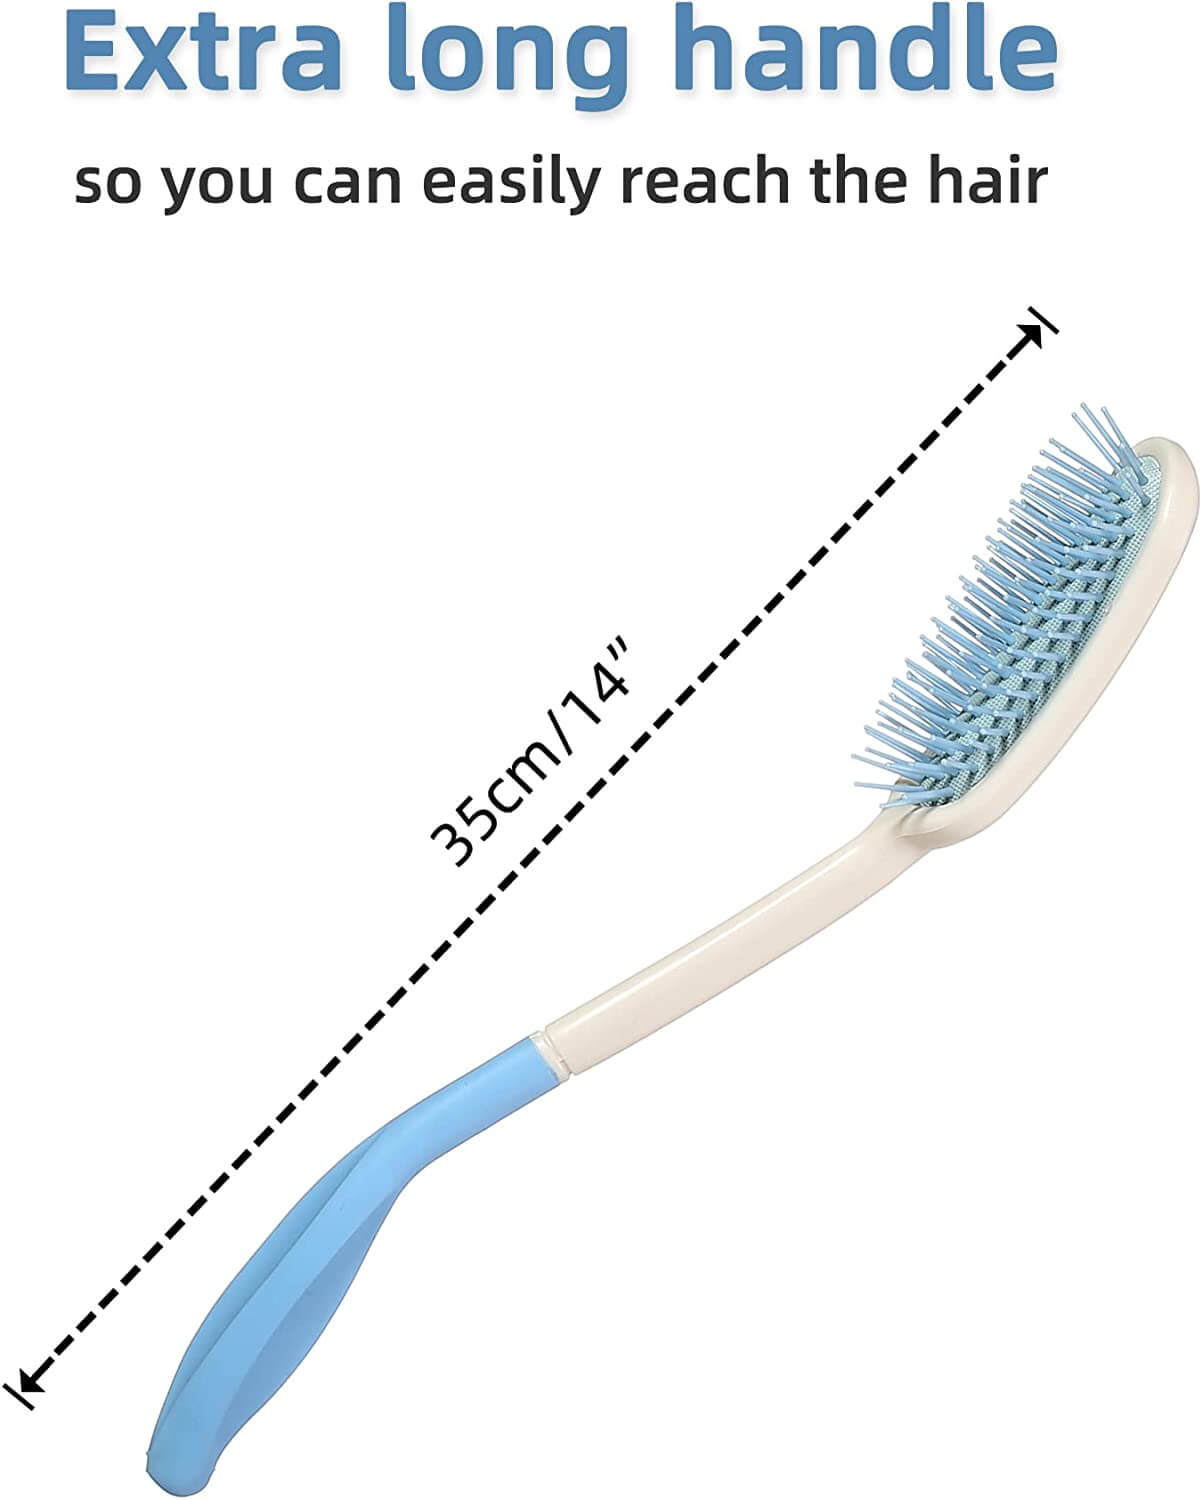 long handled hair brush for long hair, thick hair, fine hair, length of the handle